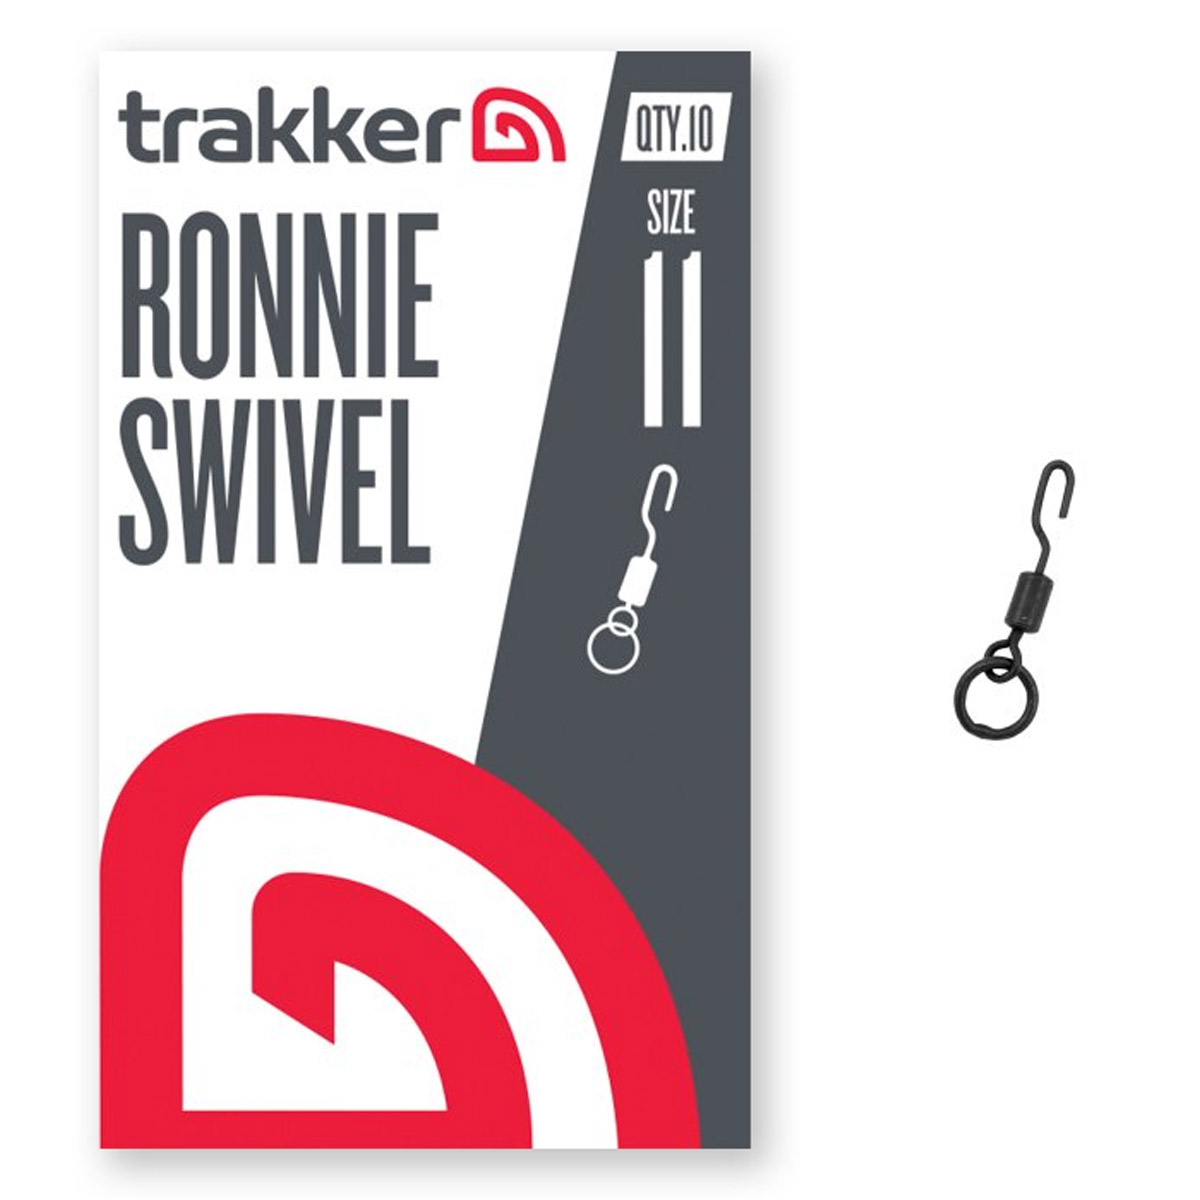 Trakker Ronnie Swivel - Size 11